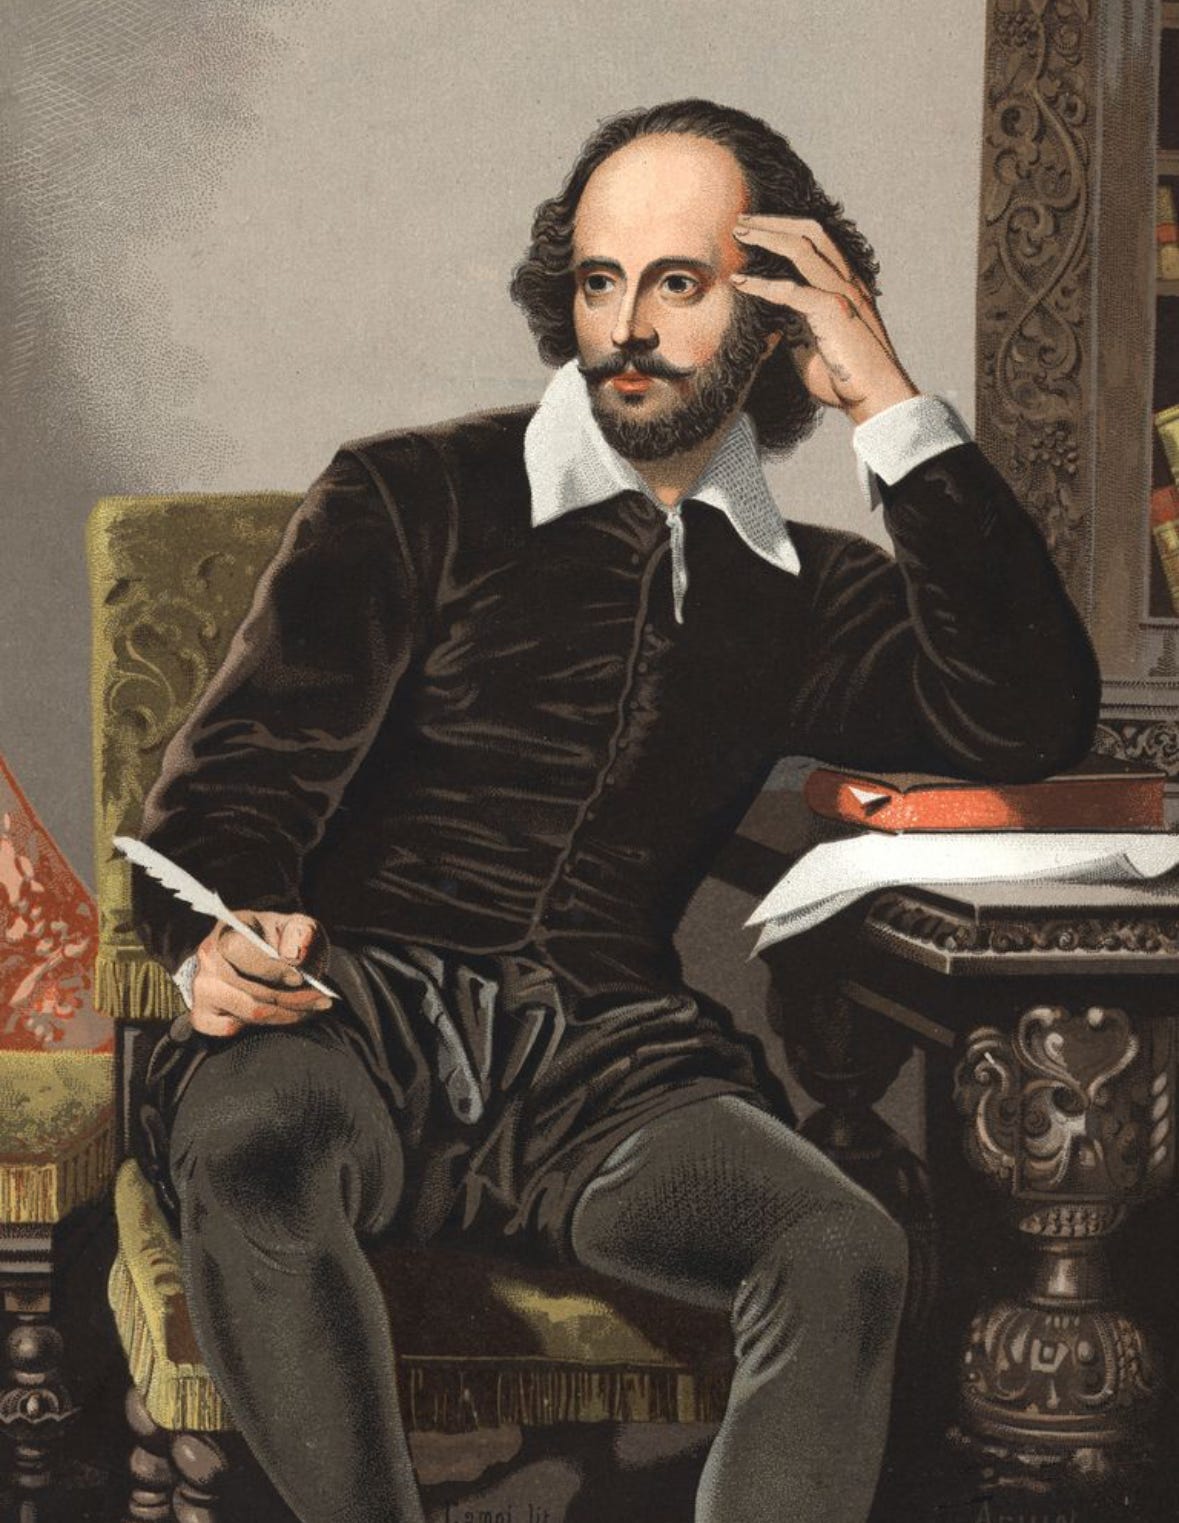 ‘Some Achieve Greatness’: William Shakespeare’s Birthday